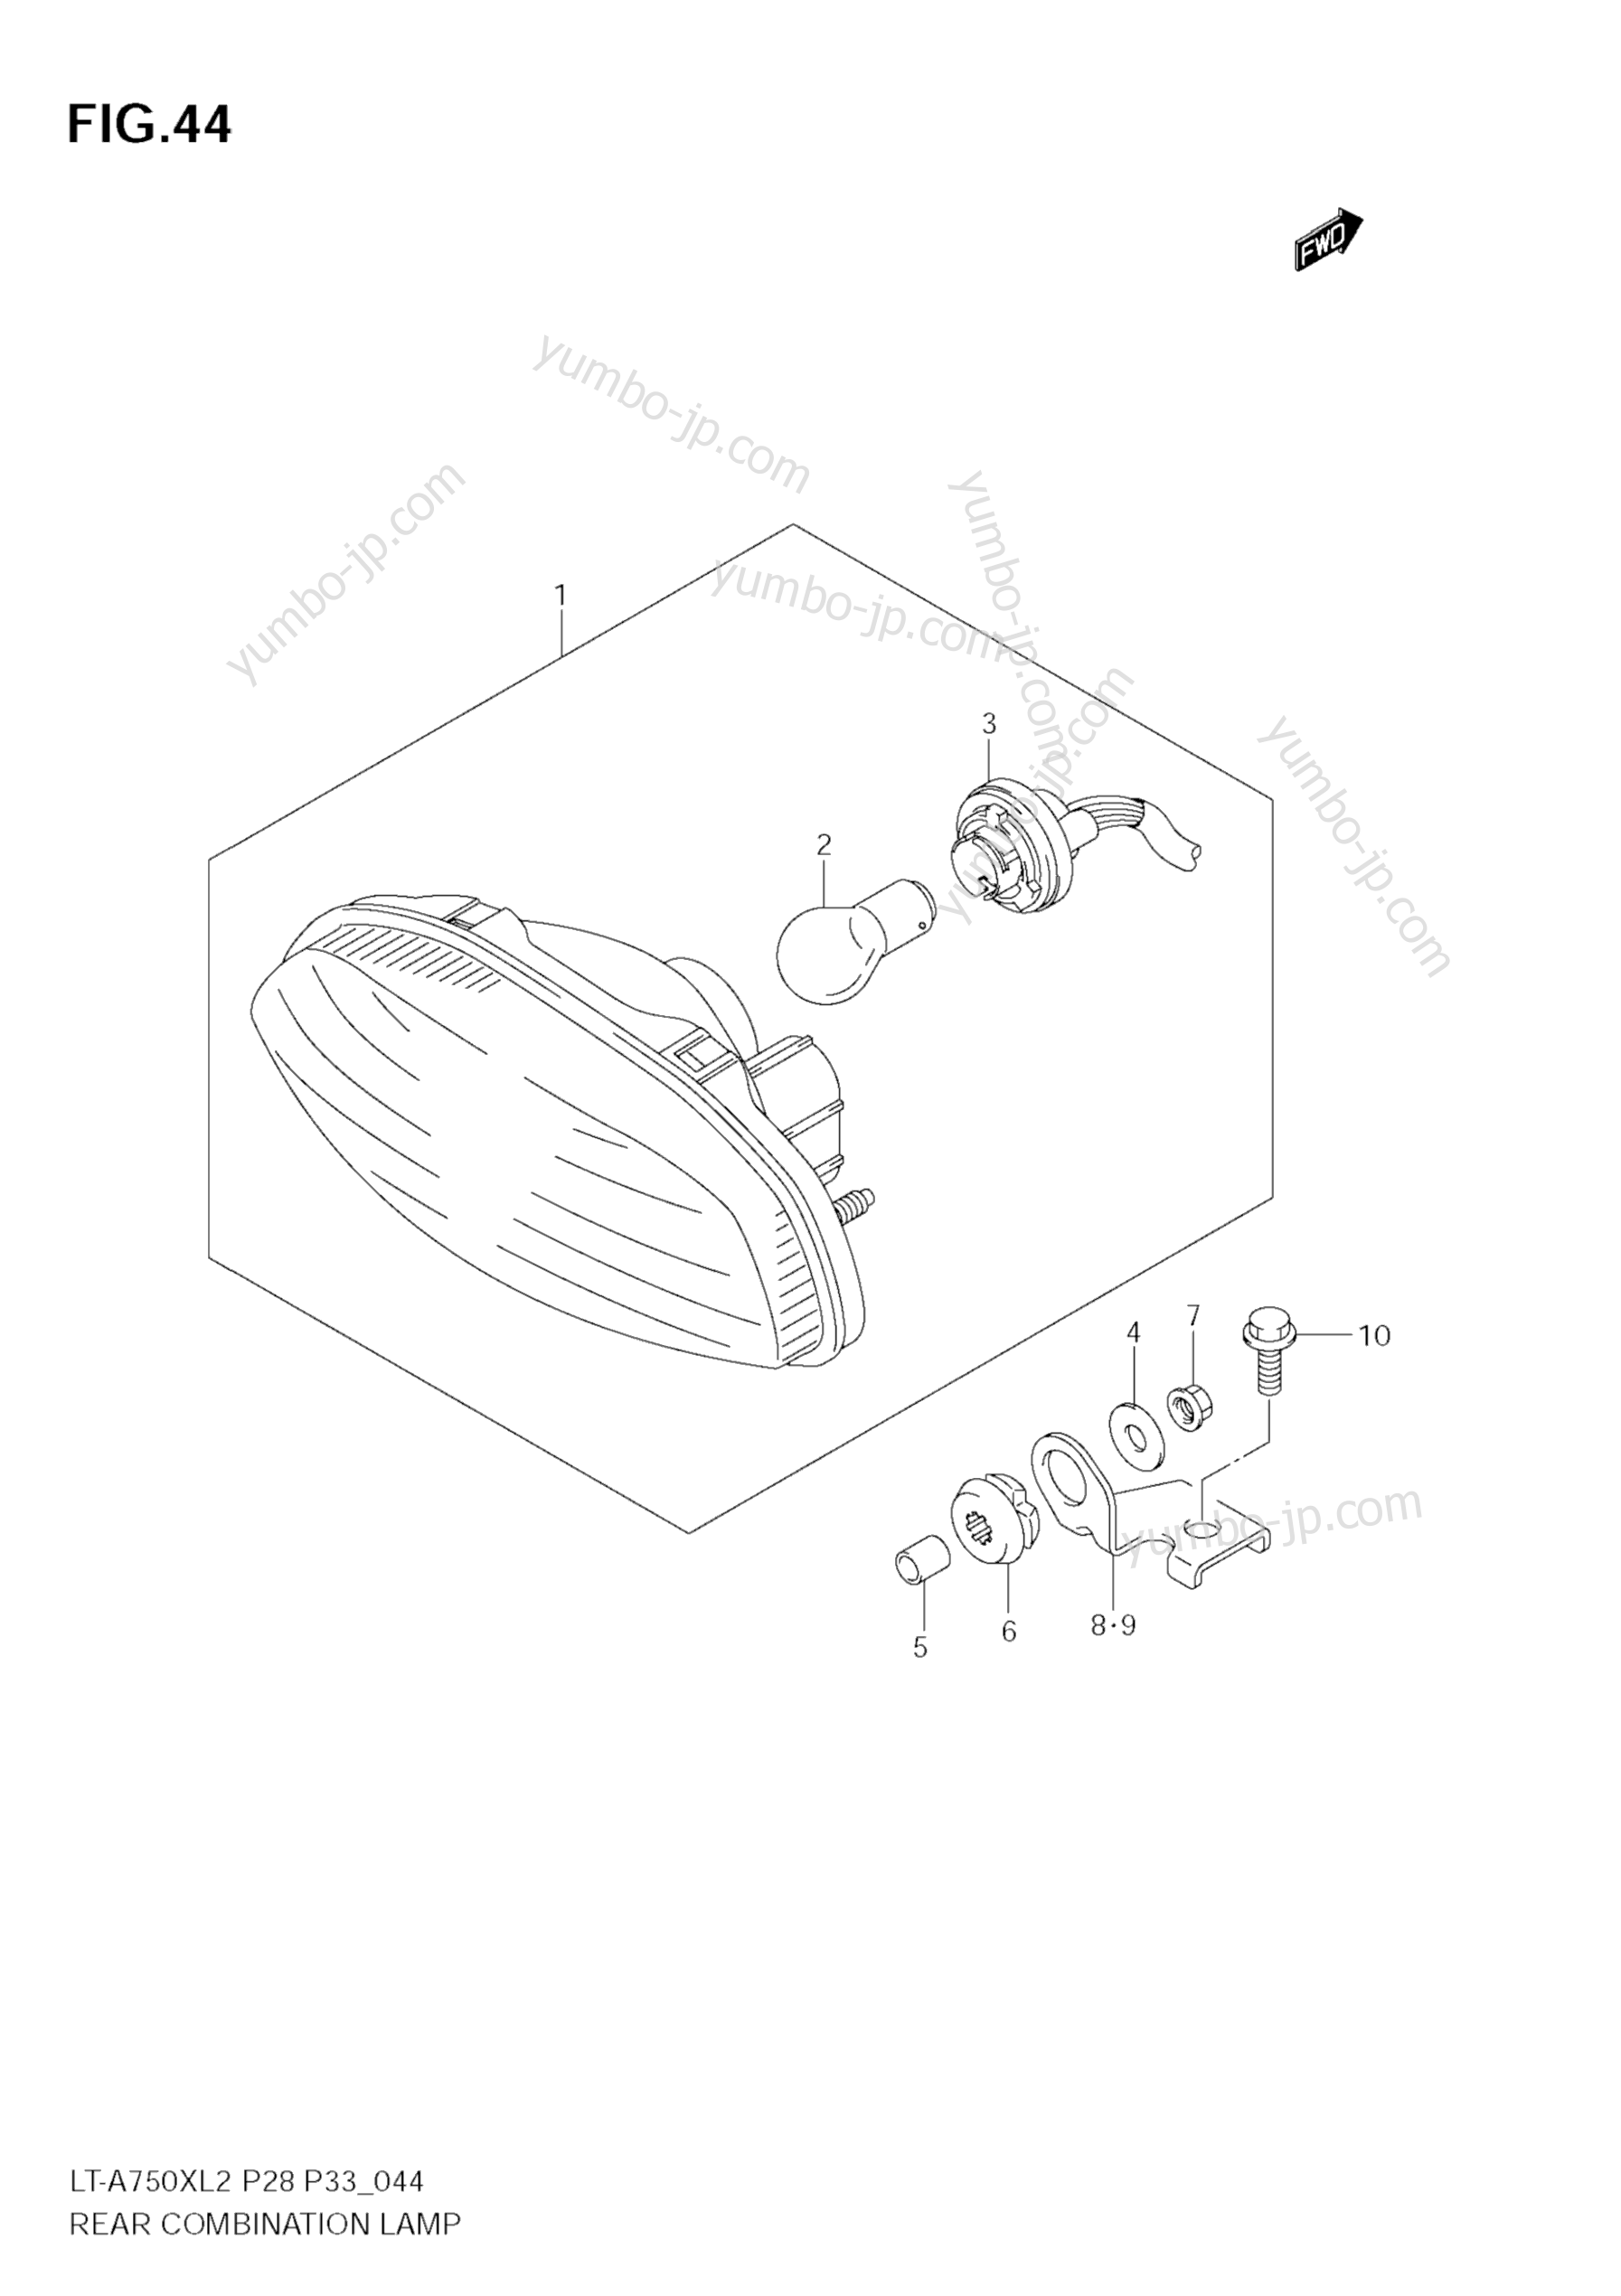 REAR COMBINATION LAMP (LT-A750X L2 E33) for ATVs SUZUKI KingQuad (LT-A750X) 2012 year